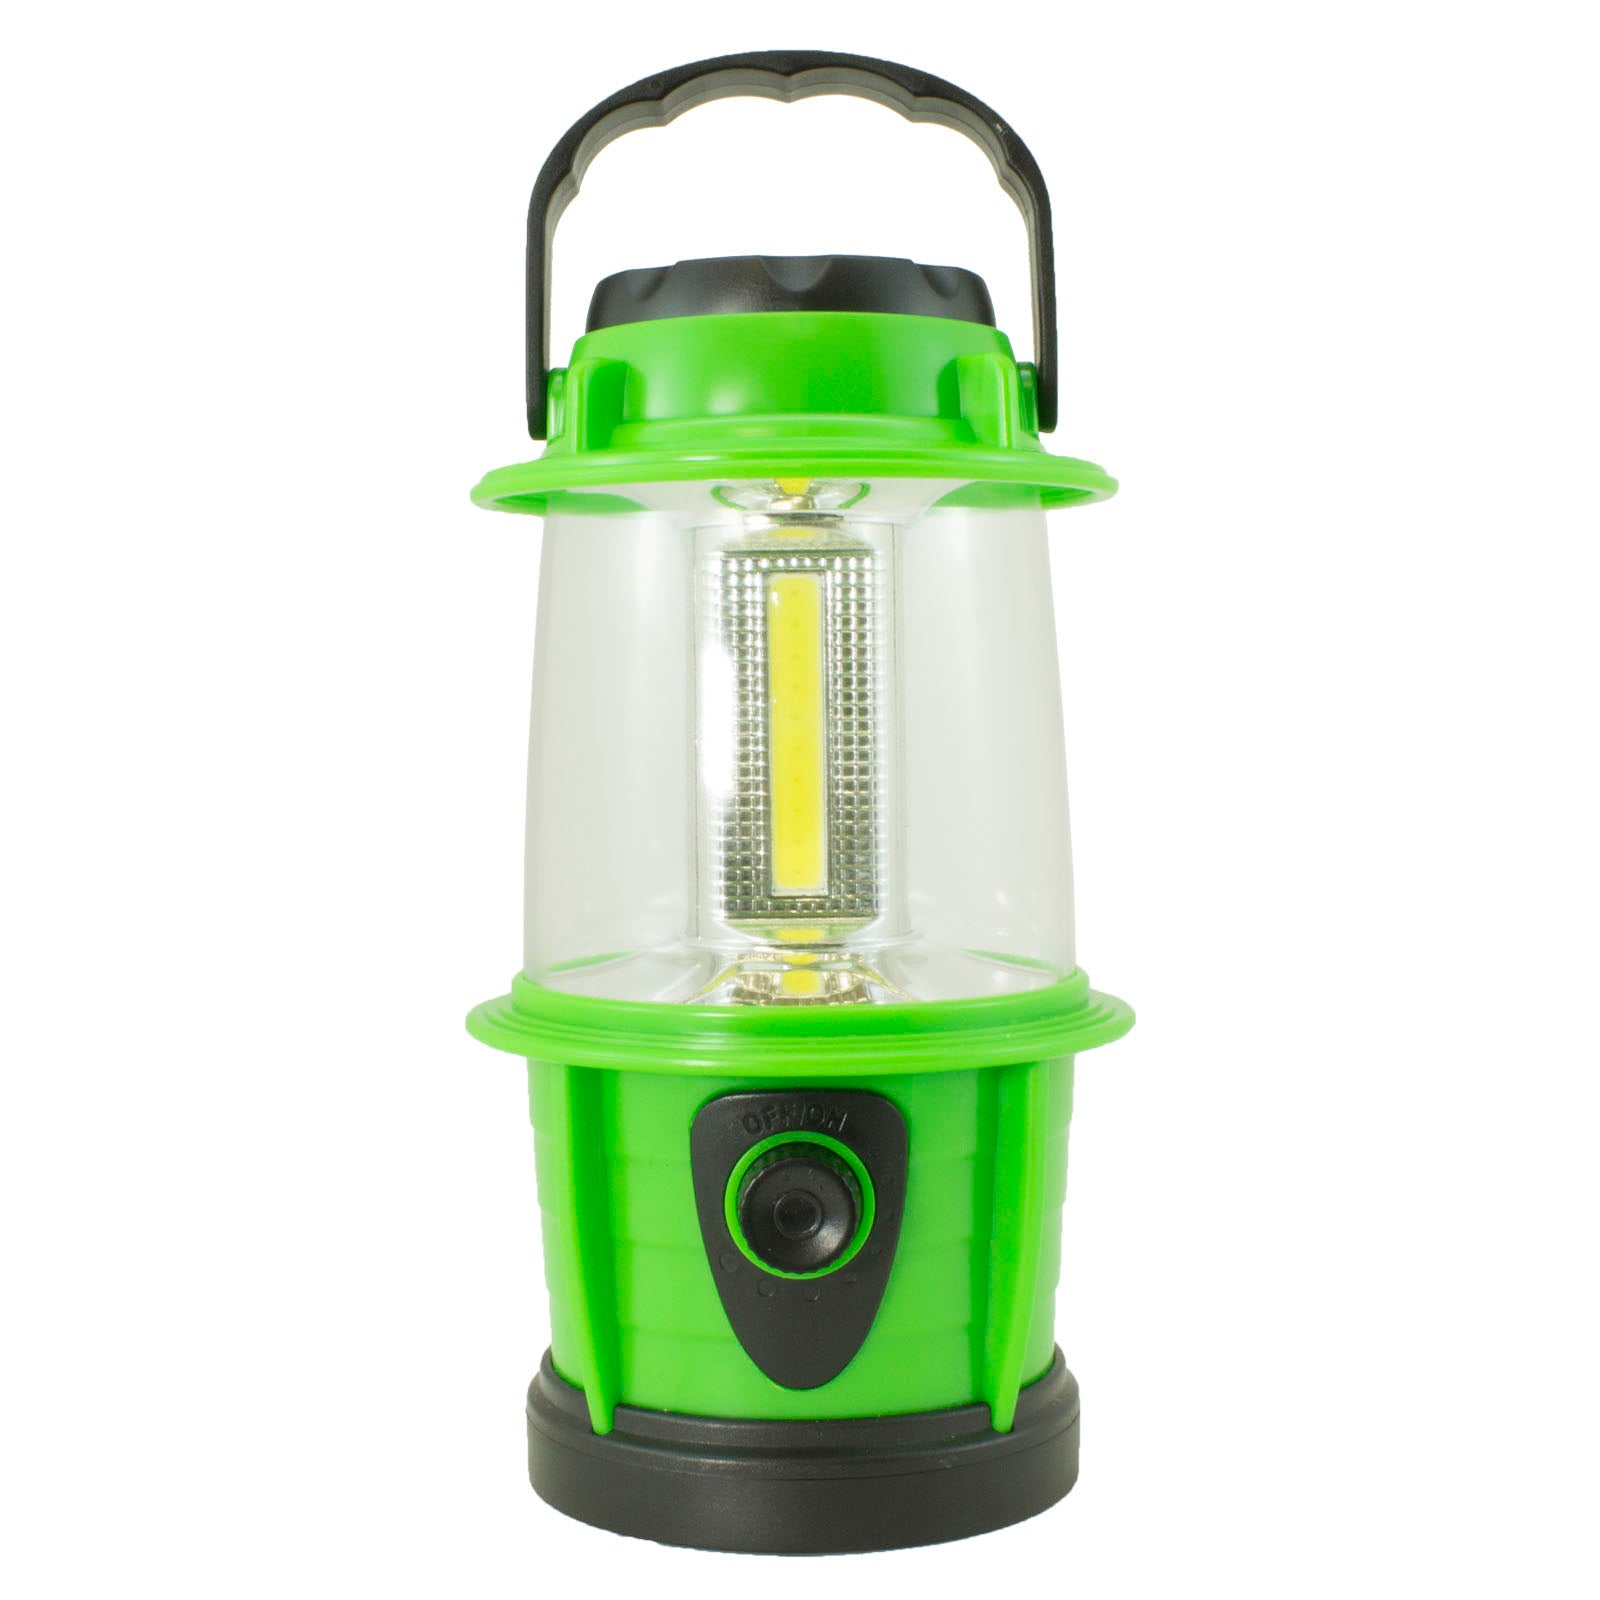 Lyricall Lanterns, Camping Lantern, Solar Lantern Flashlights Charging for Phone, USB Rechargeable LED Camping Lantern, Collapsible & Portable for